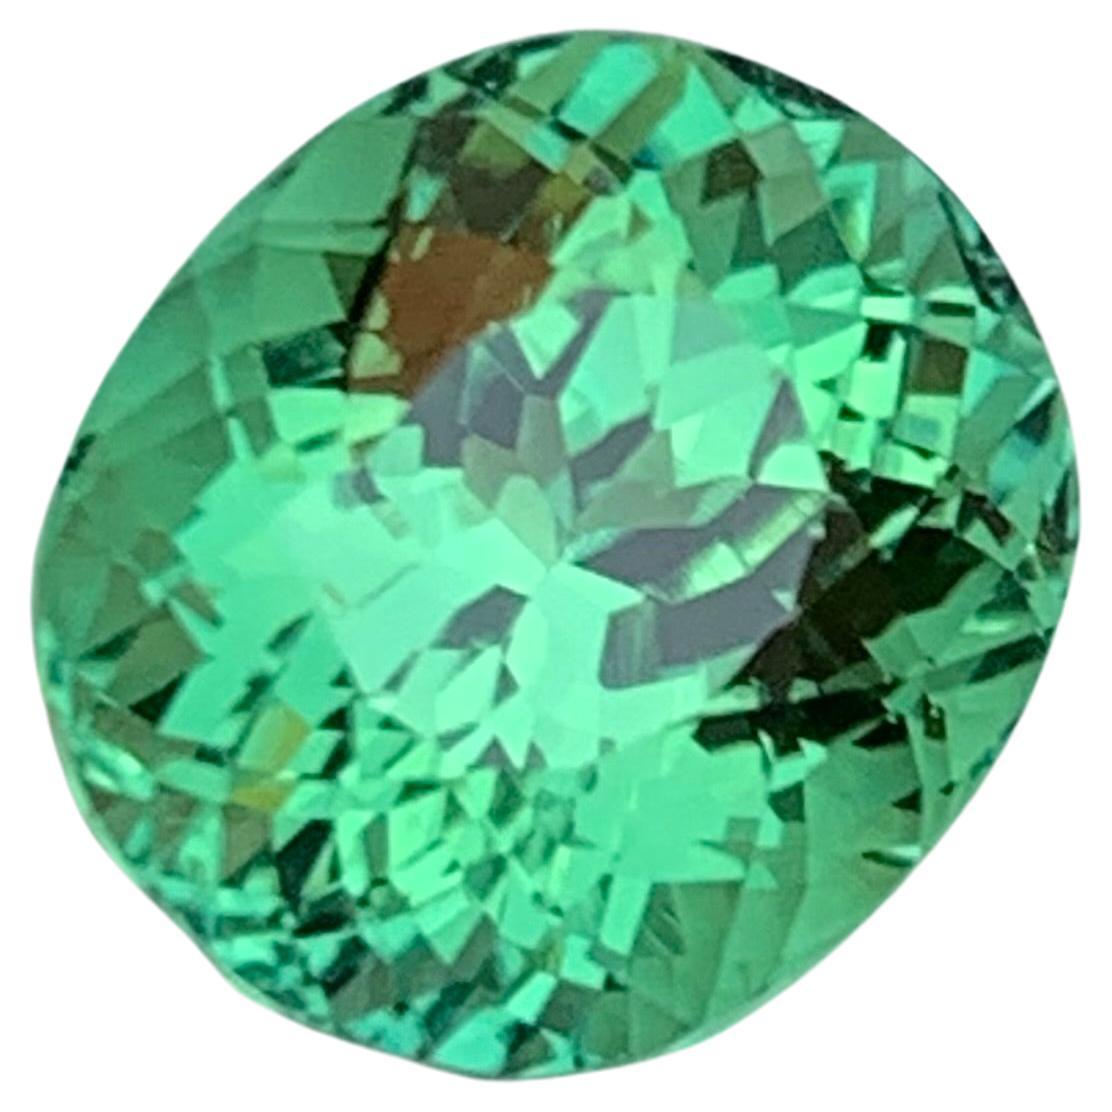 Rare Bluish Green Fancy Cushion Cut Natural Tourmaline Loose Gemstone, 5.50 Ct